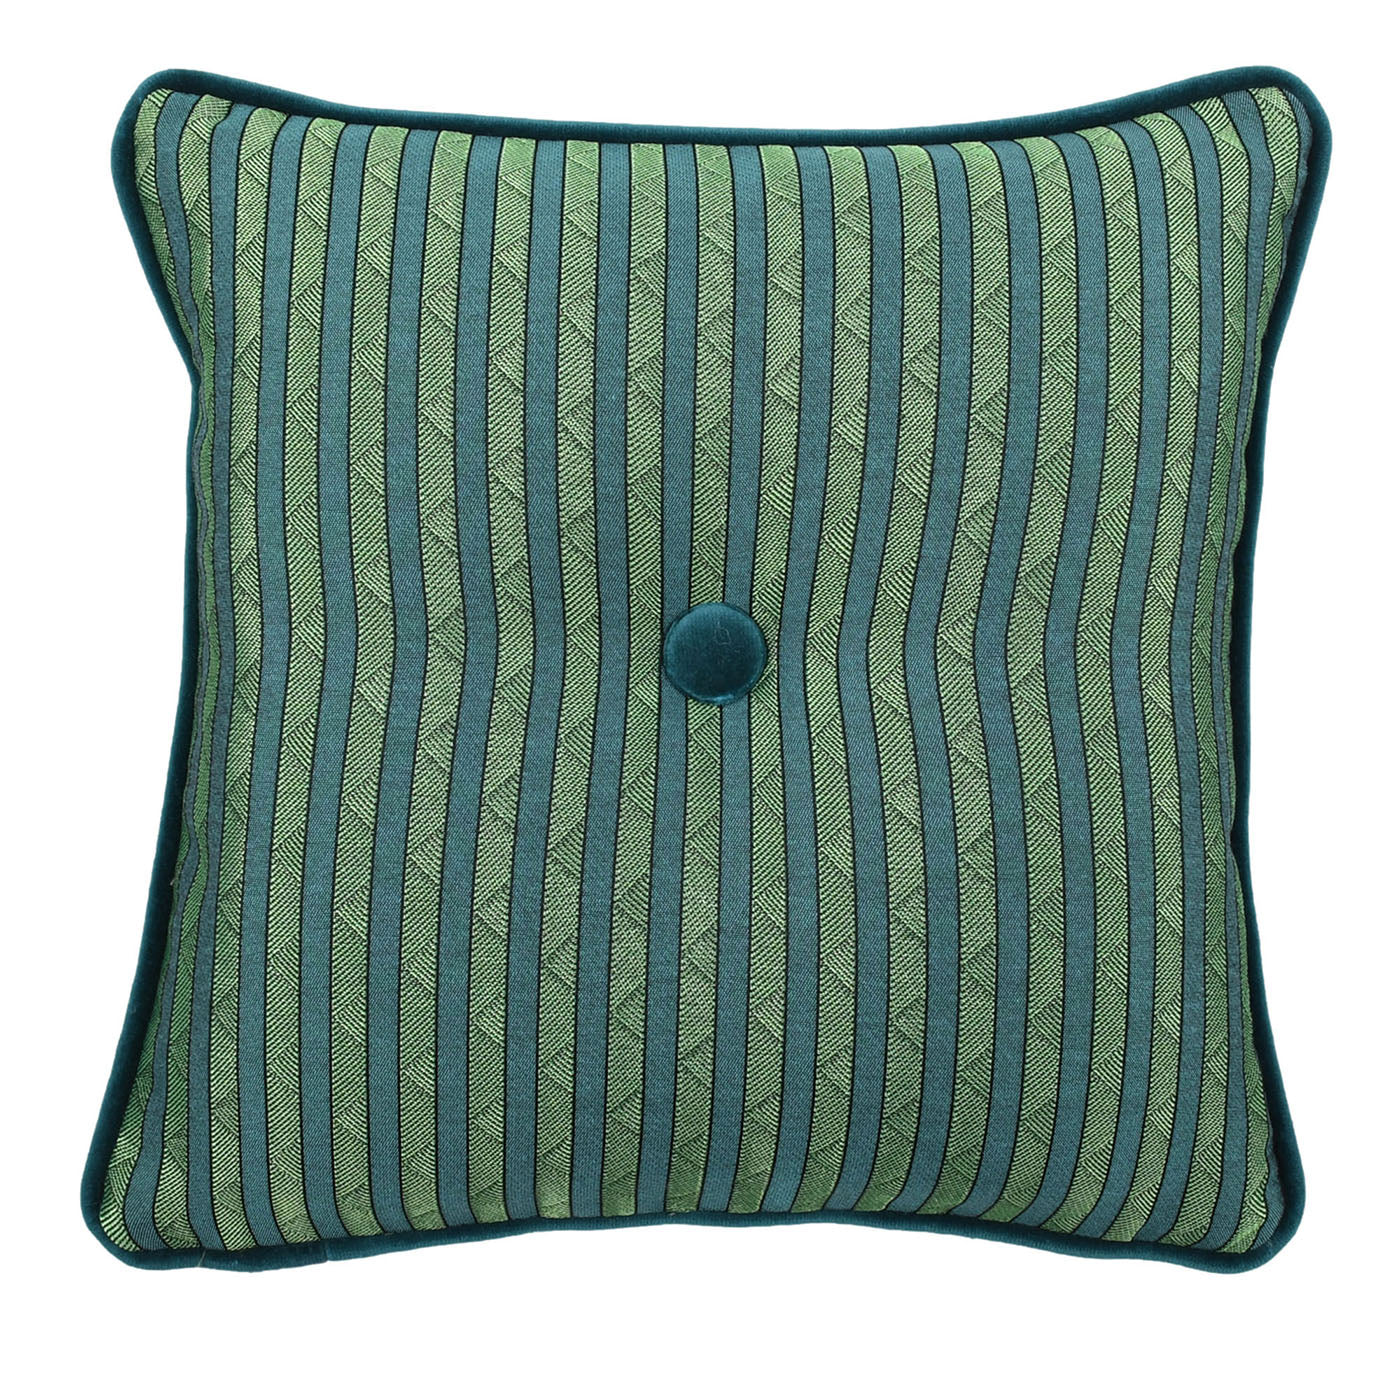 Emerald Carré Cushion in striped jacquard fabric - Main view